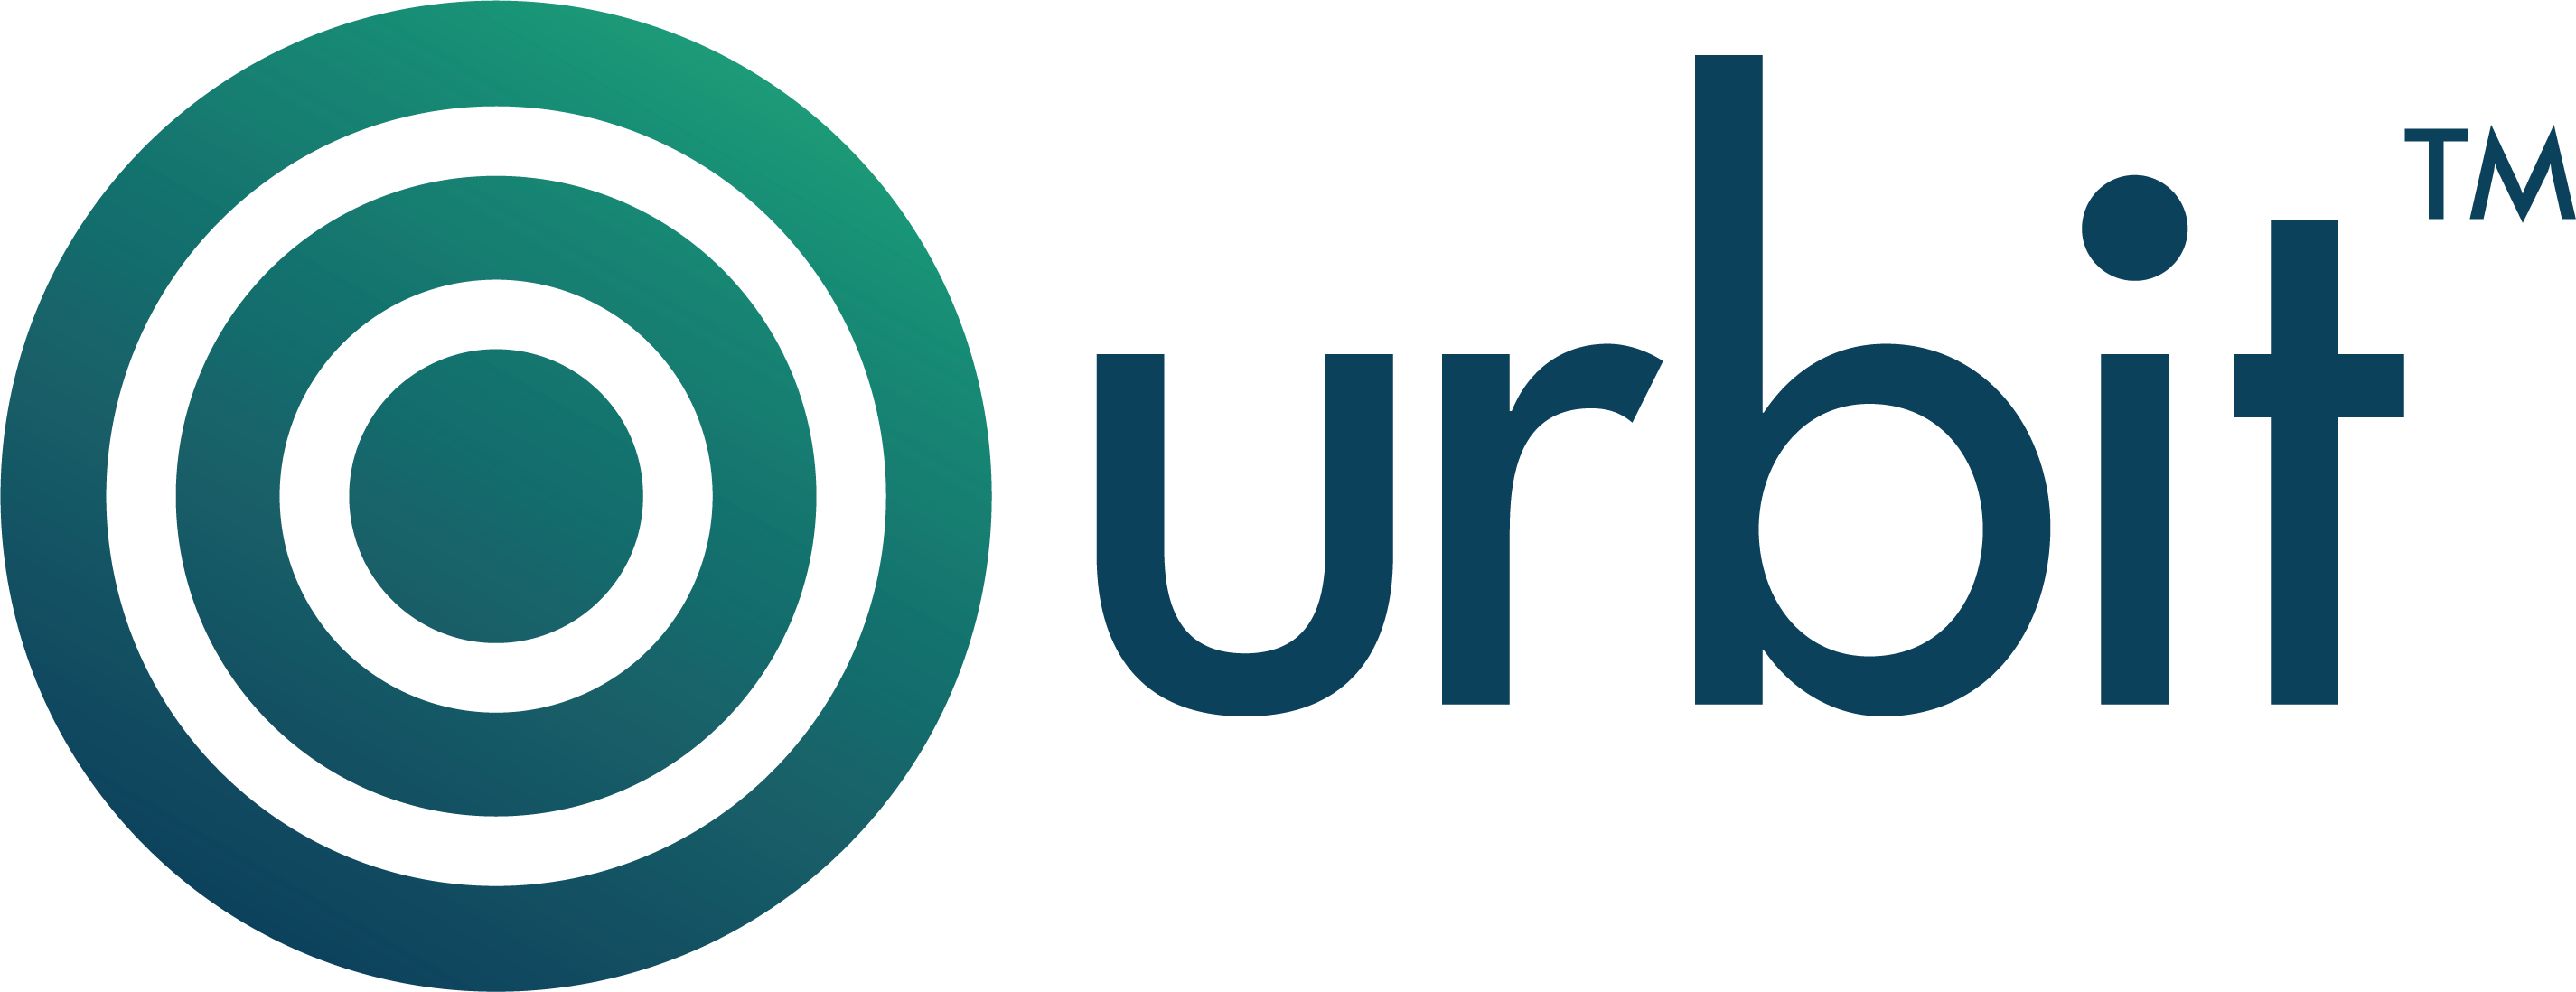 Urbit Group Wins 2021 ITU Digital World SME Awards for Their Innovative Digital Finance Solution 